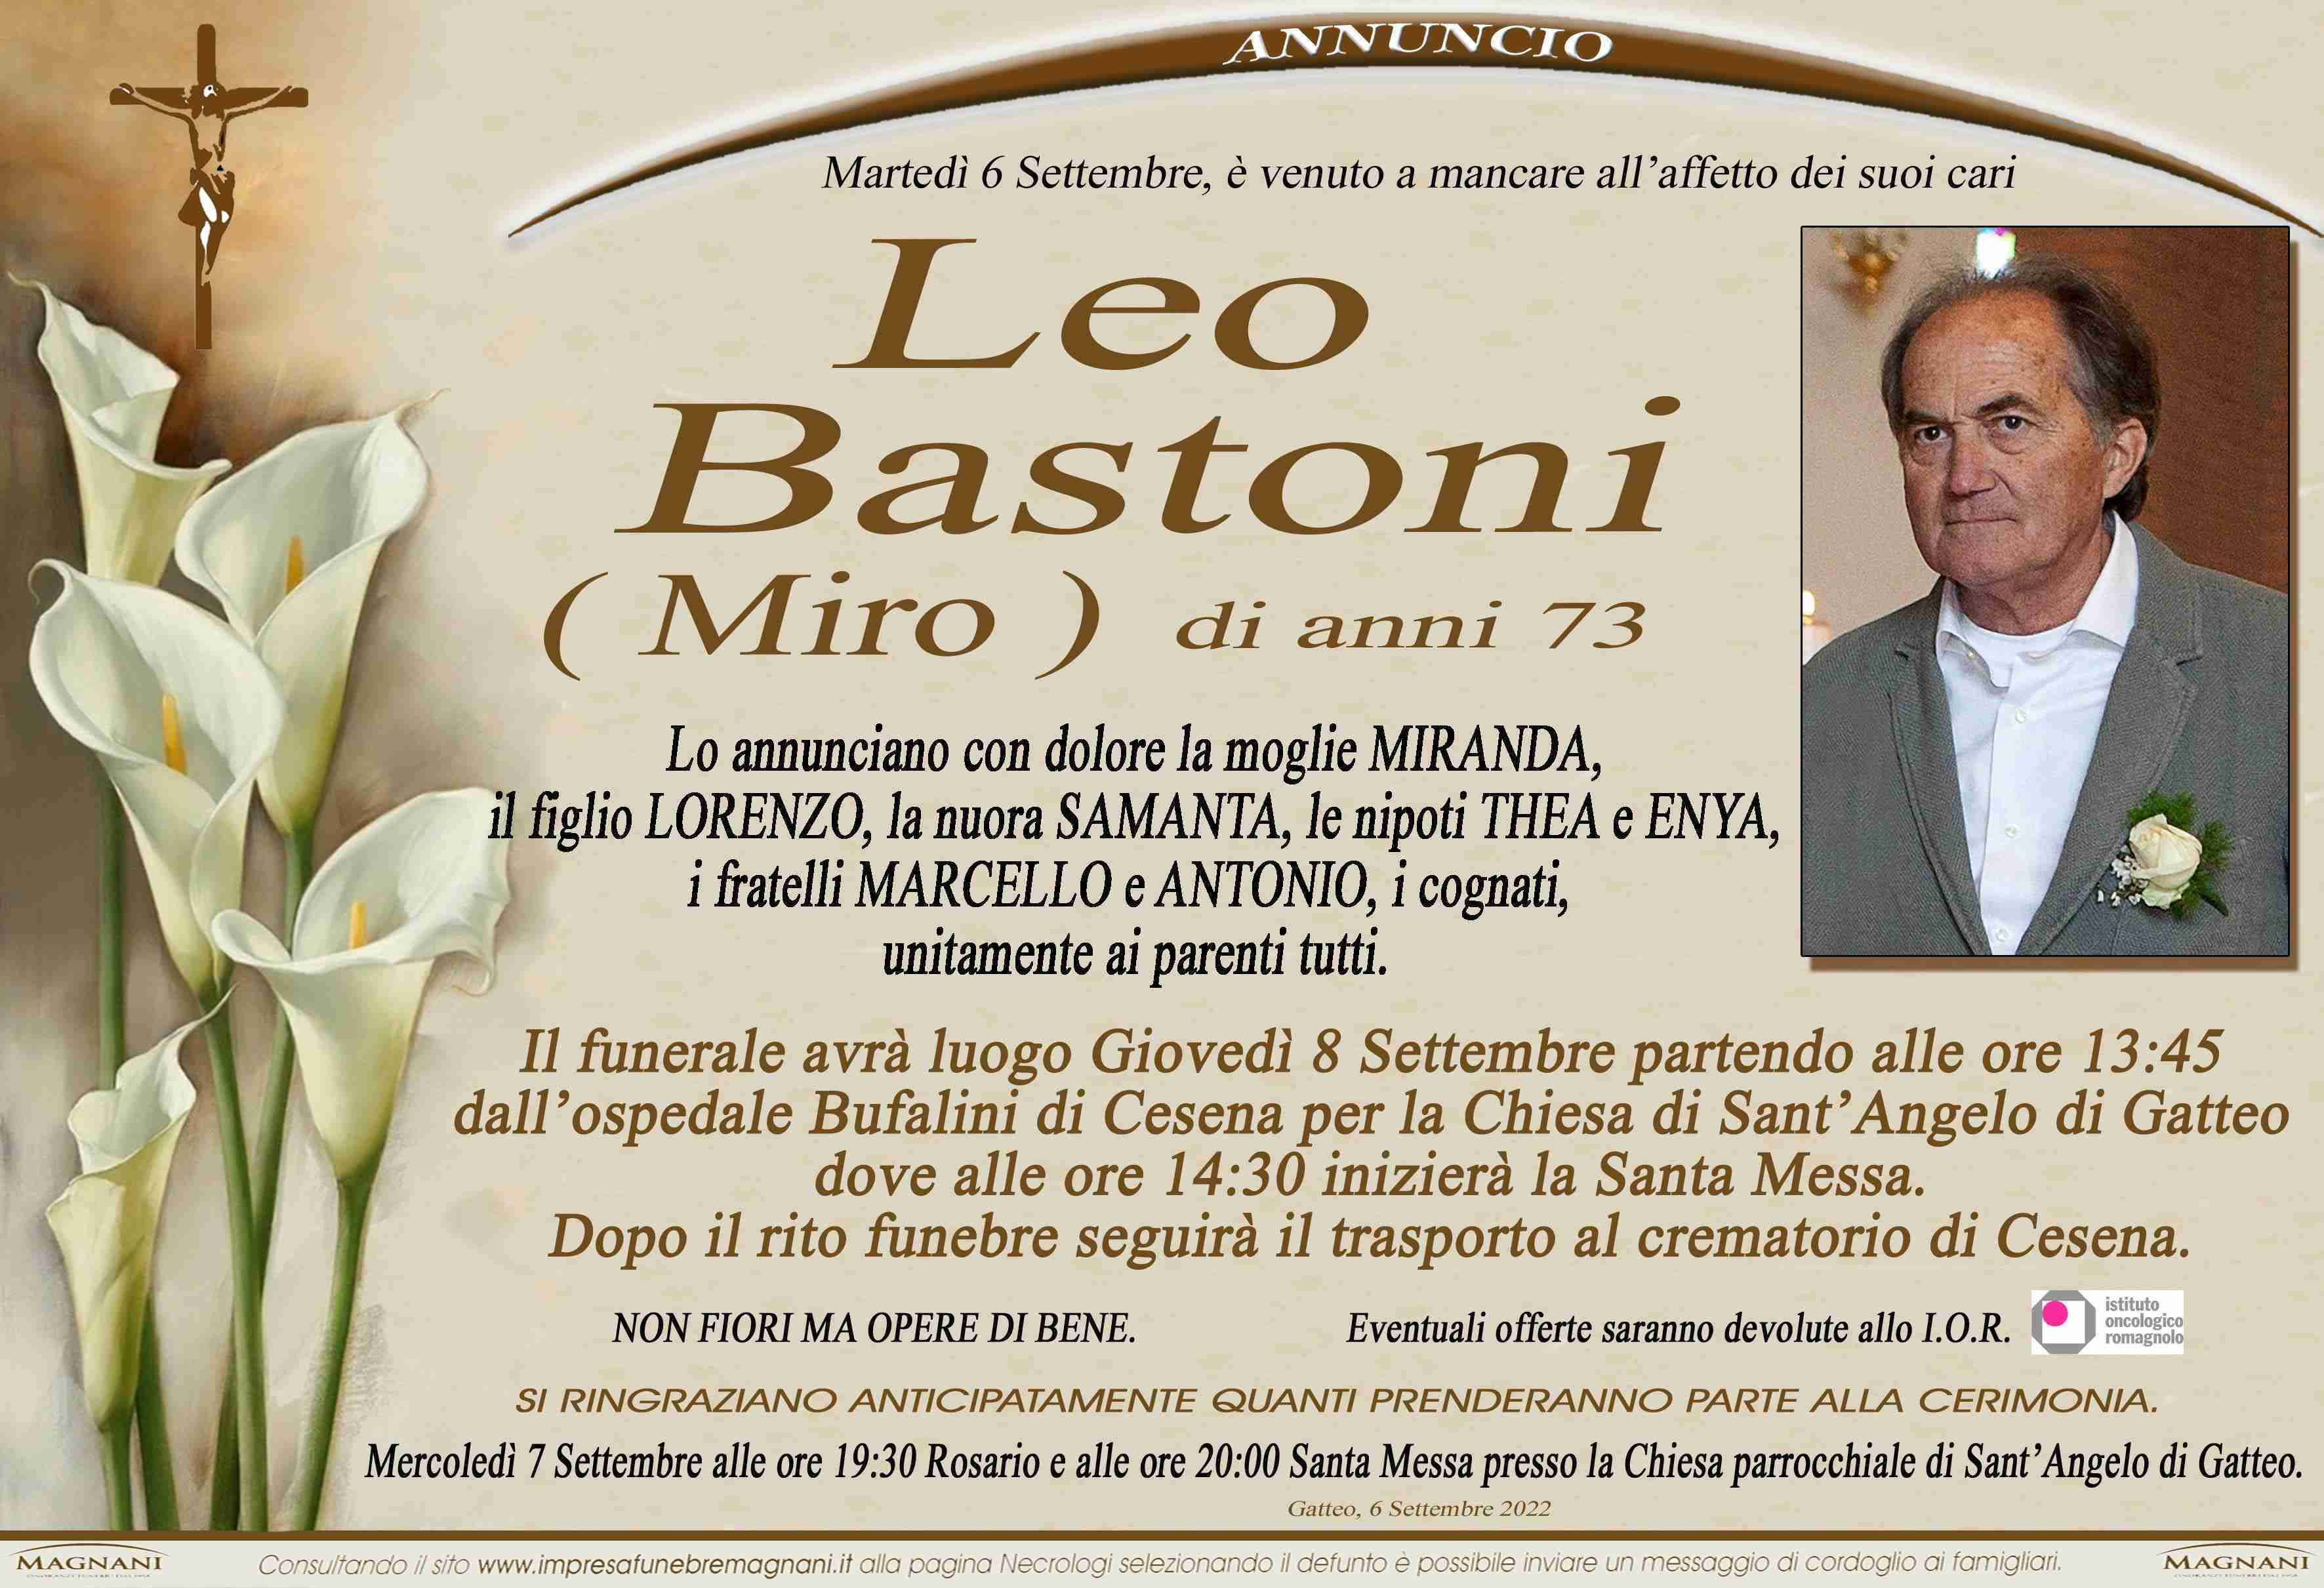 Leo Bastoni